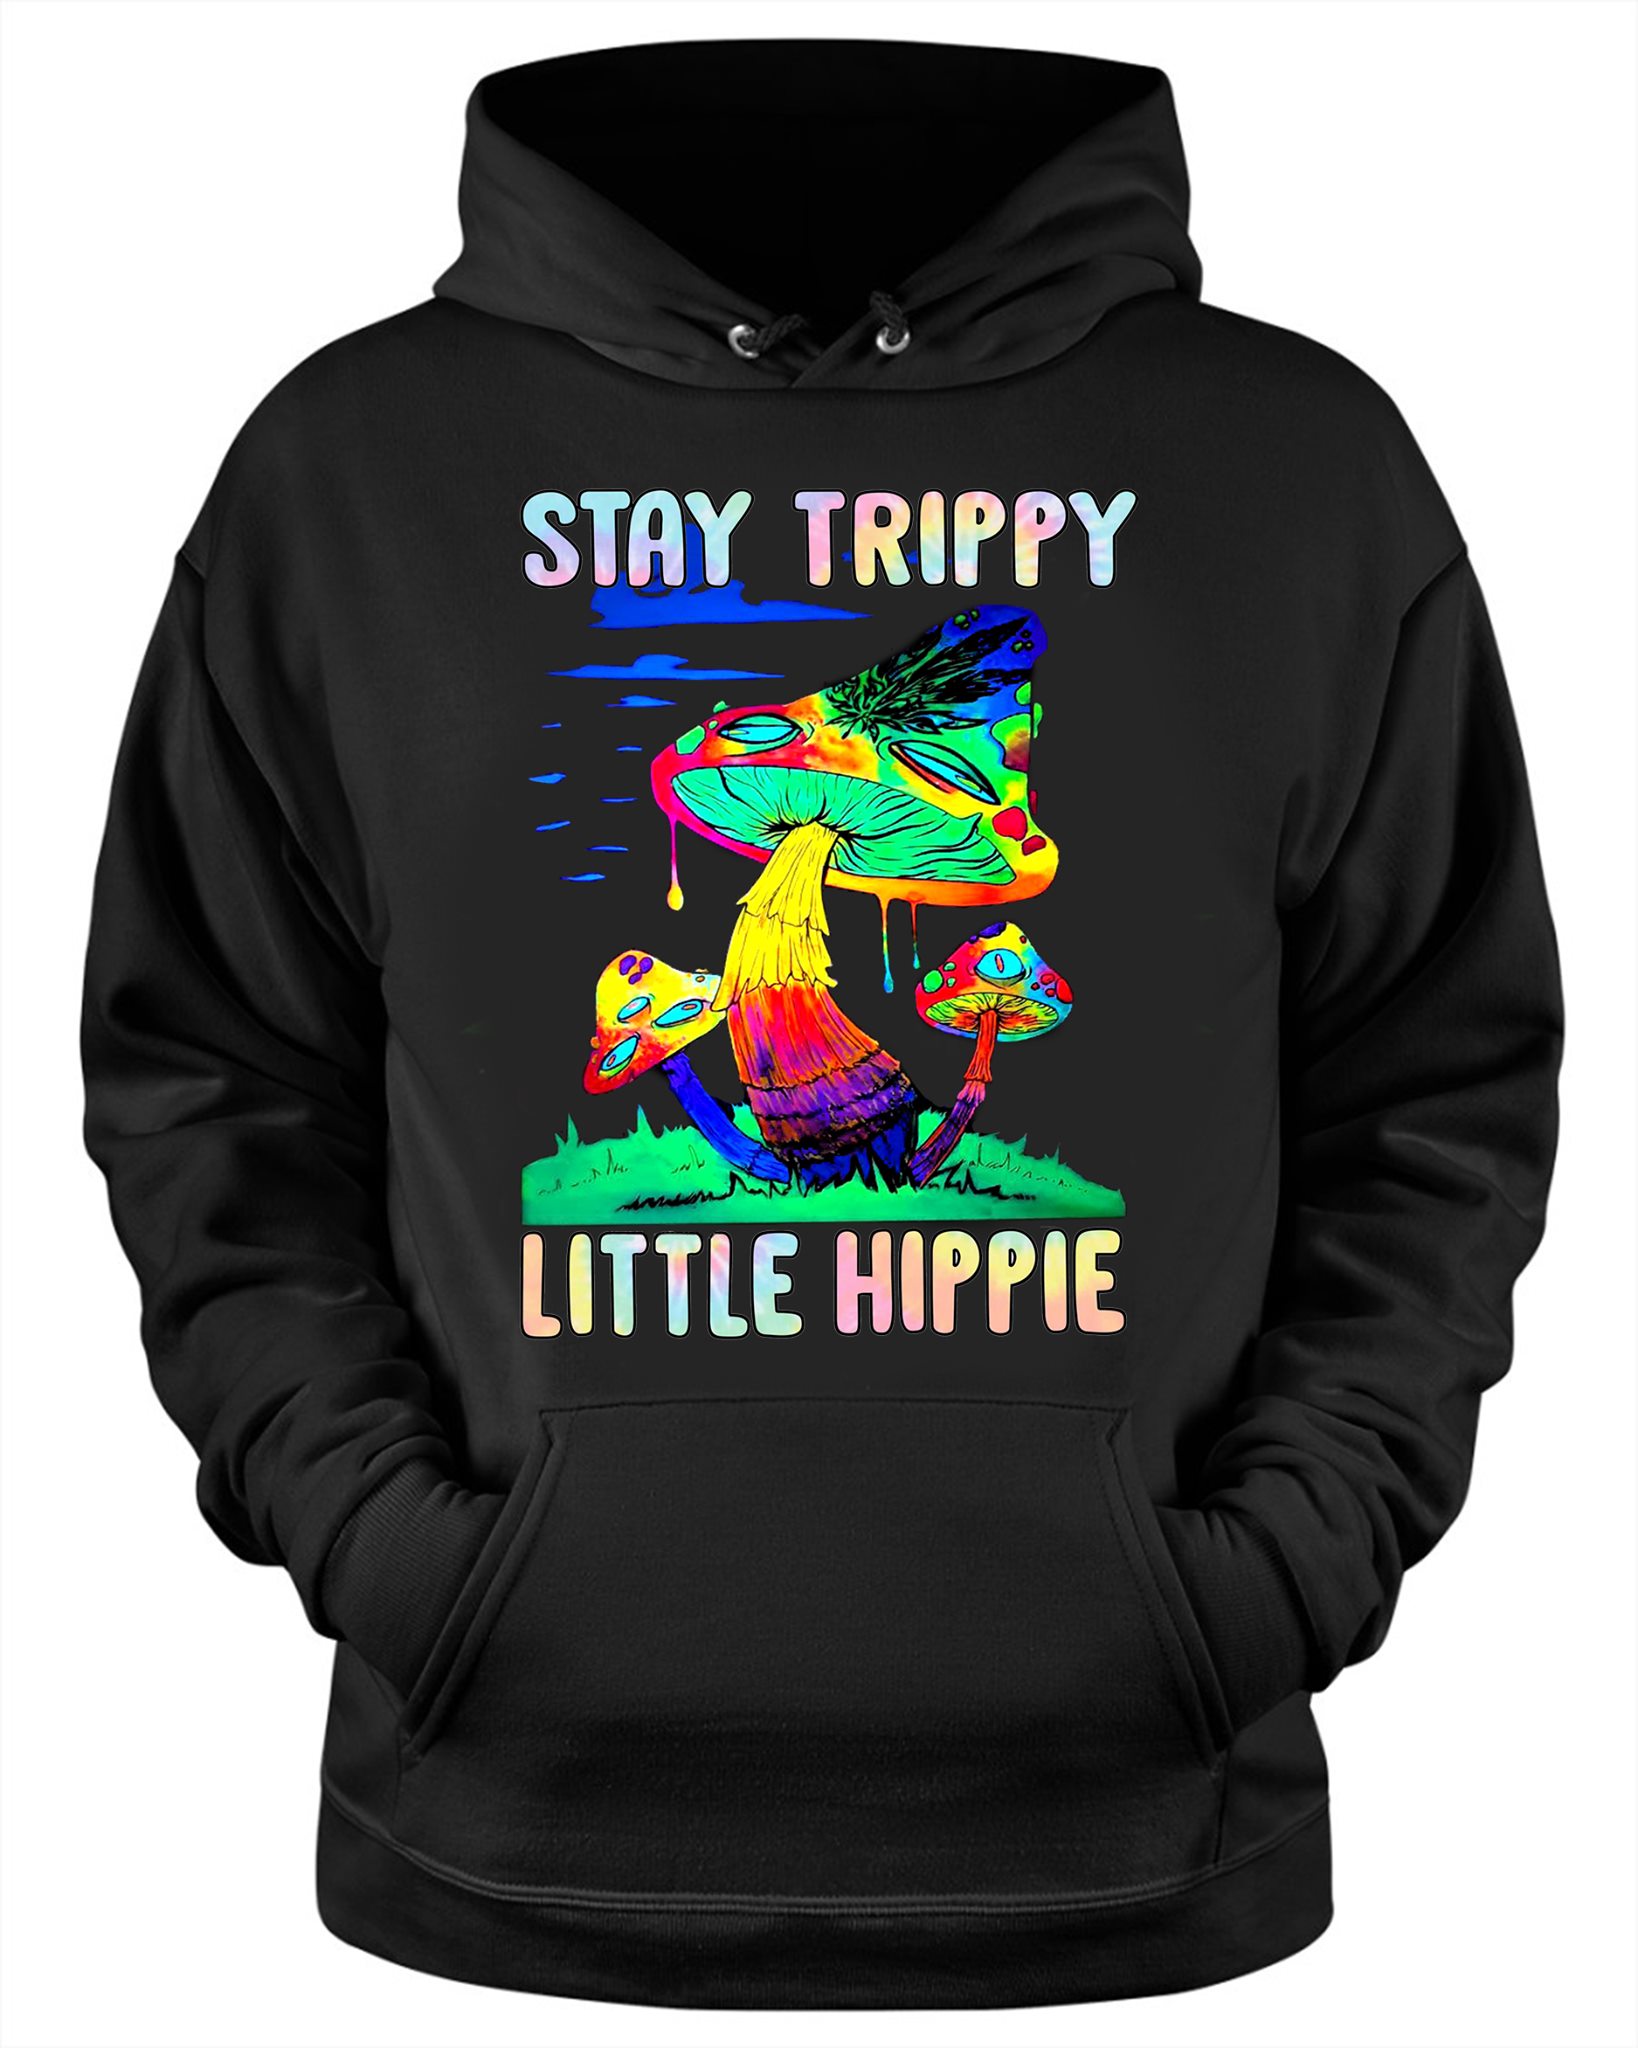 Stay trippy little hippie - Colorful mushroom